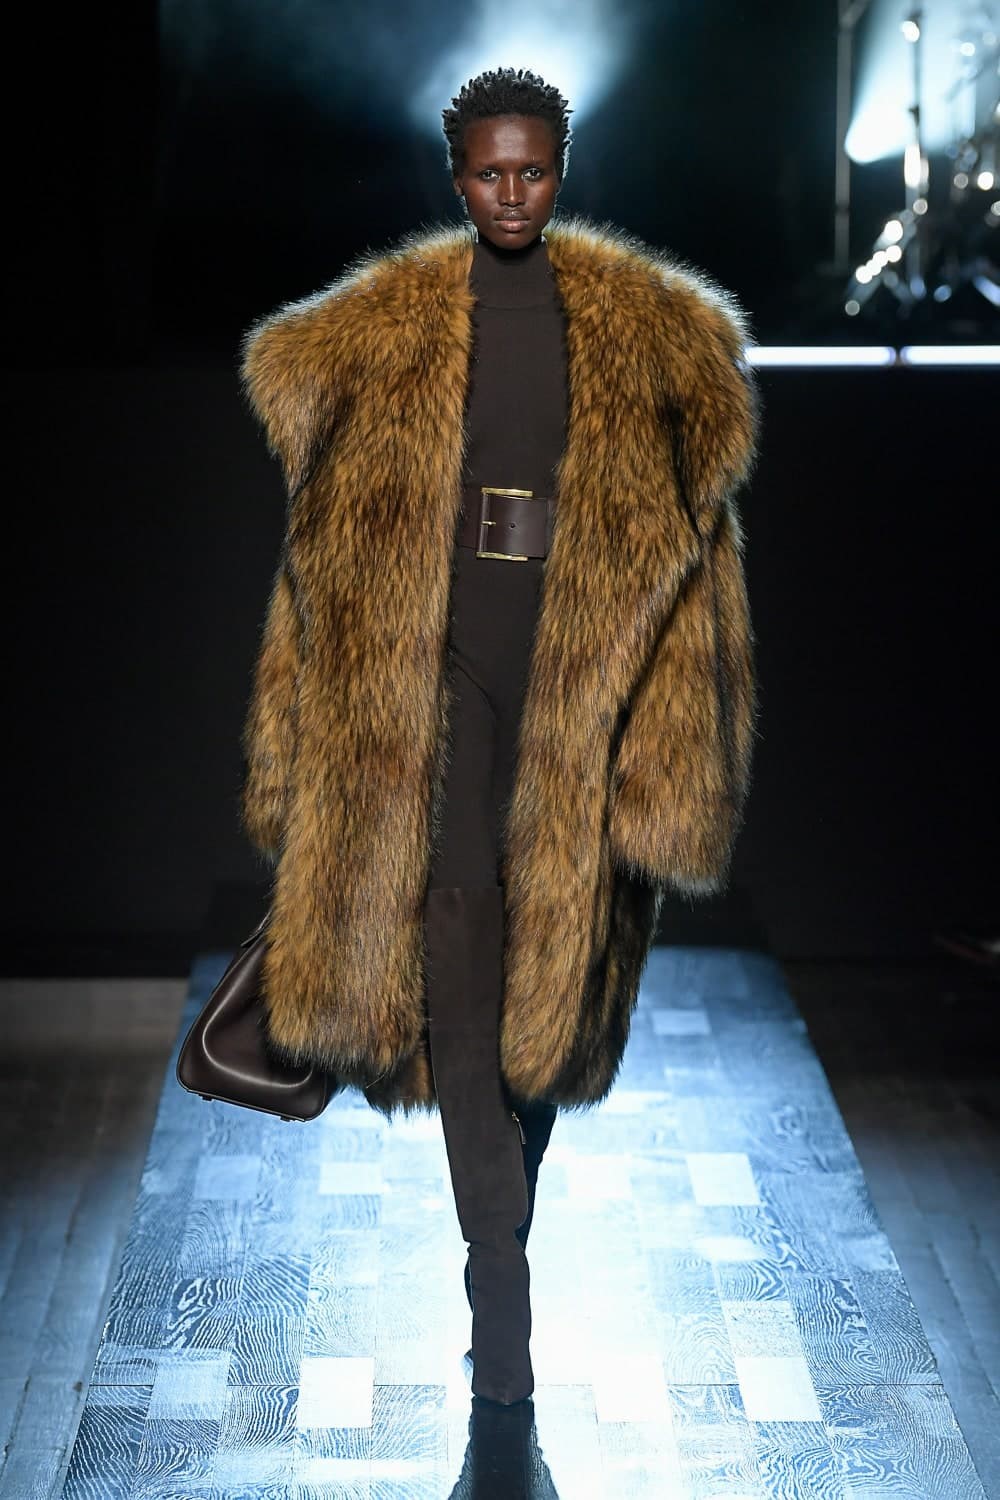 Michael Kors Collection Fall Winter 2022 - New York Fashion Week